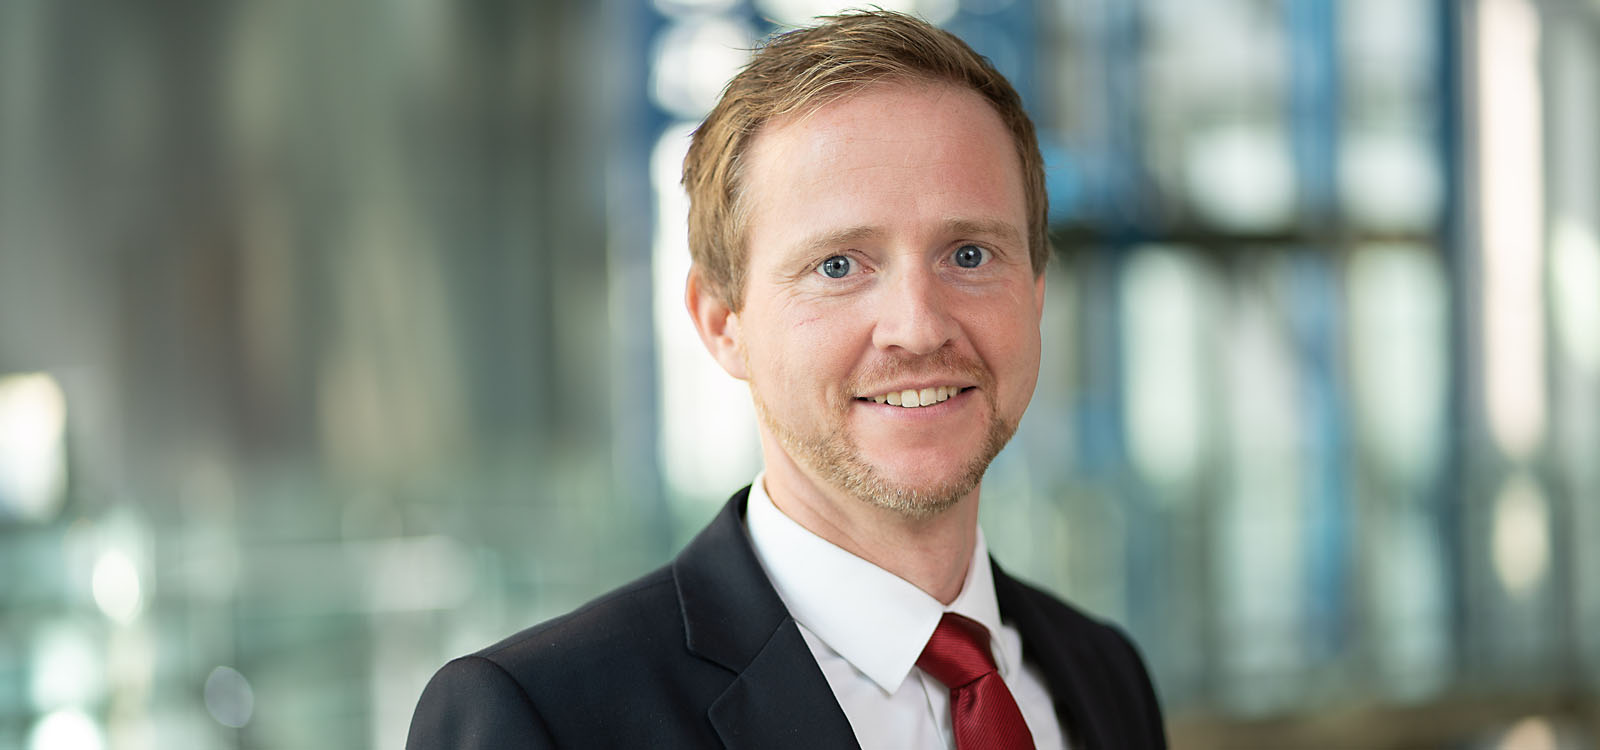 Bankrecht und Kapitalmarktrecht Heidelberg – Rechtsanwalt Dr. Martin Andreas Duncker